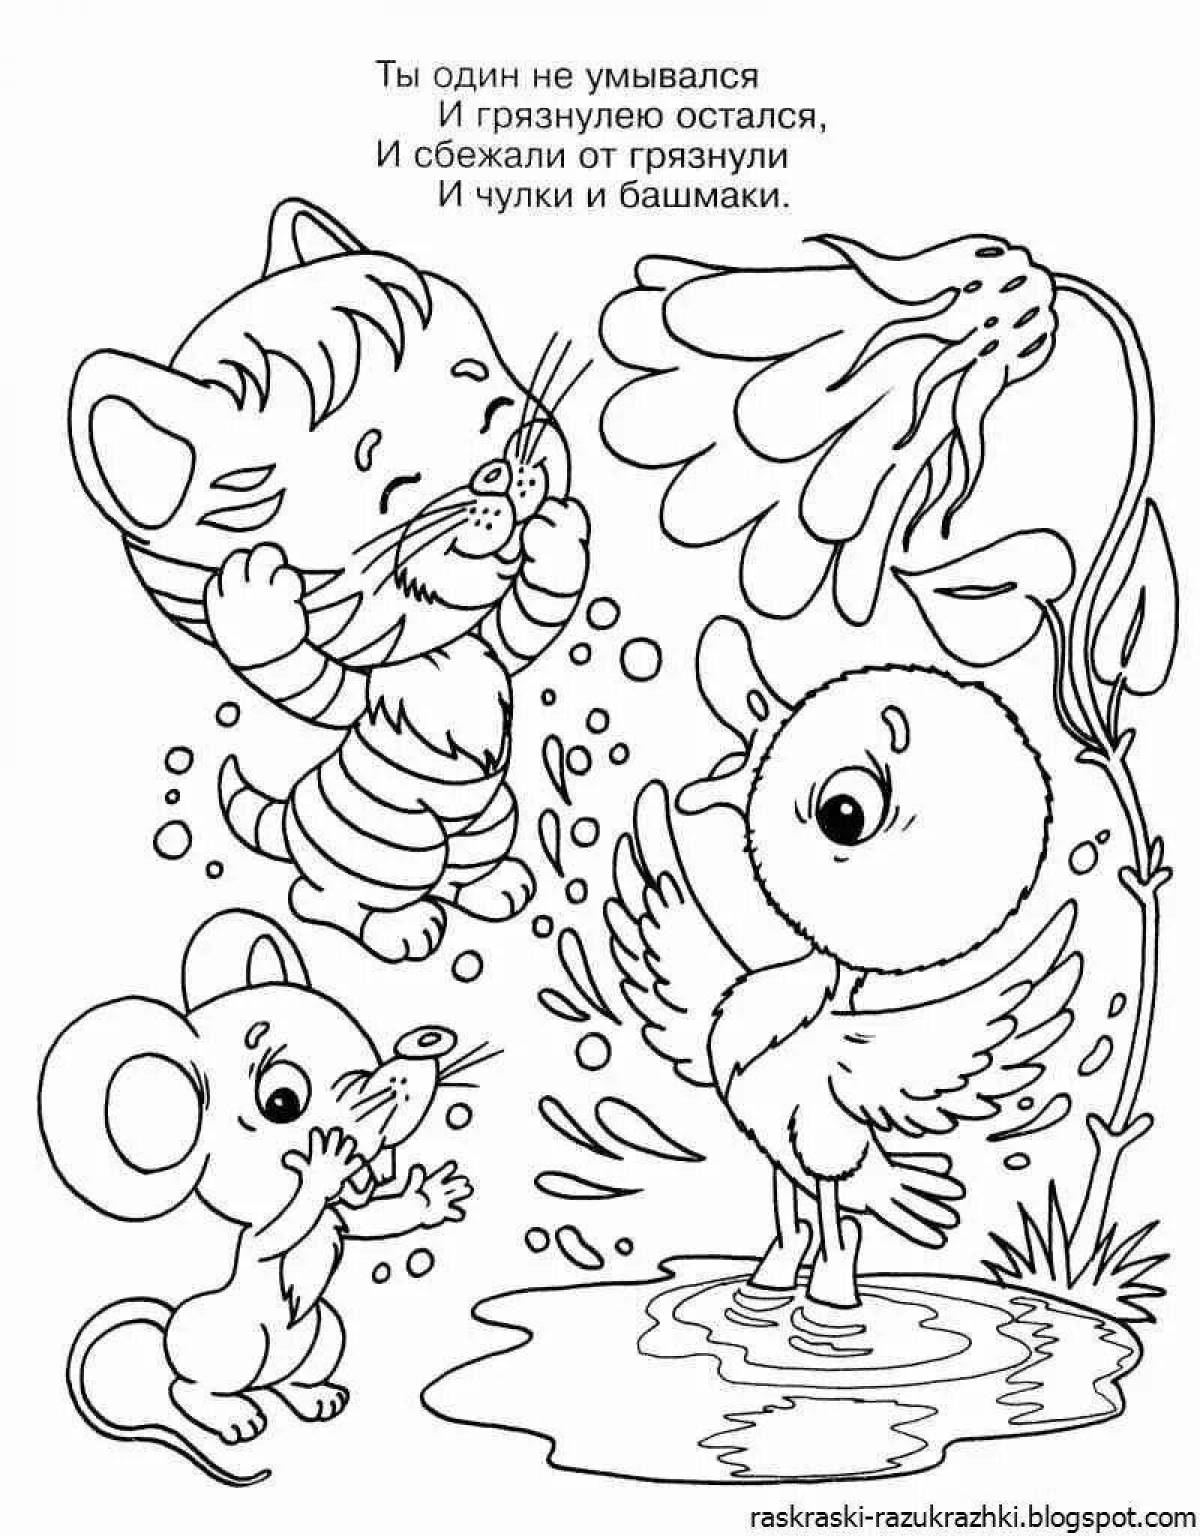 Chukovsky's fascinating confusion coloring book